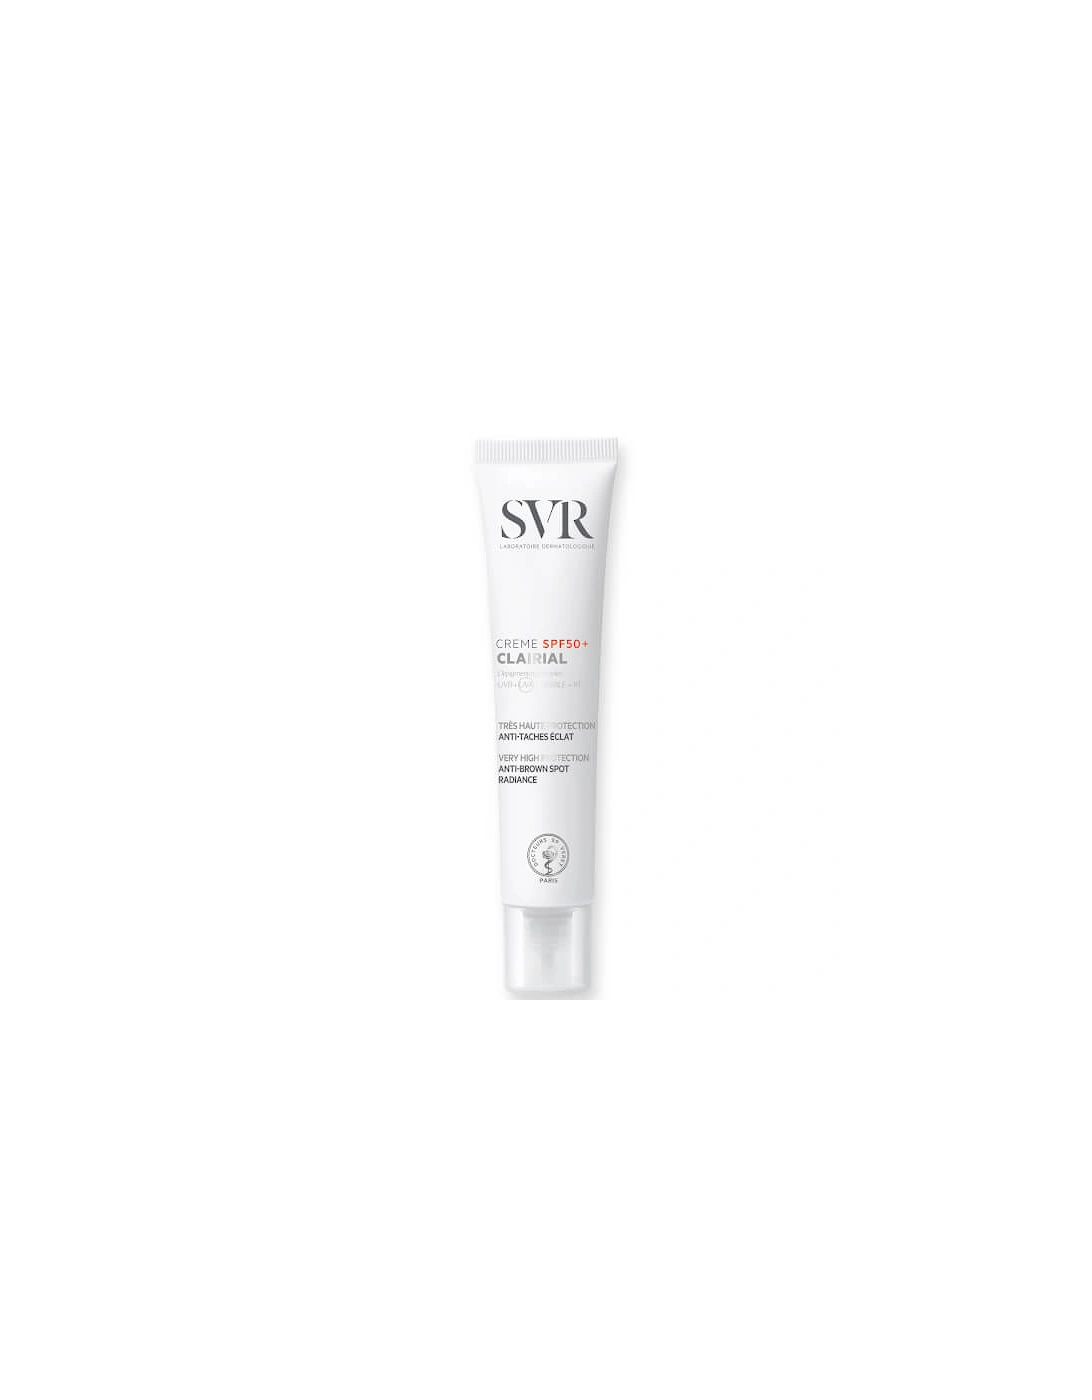 SVR CLAIRIAL Hyperpigmentation Cream SPF50+ 40ml, 2 of 1